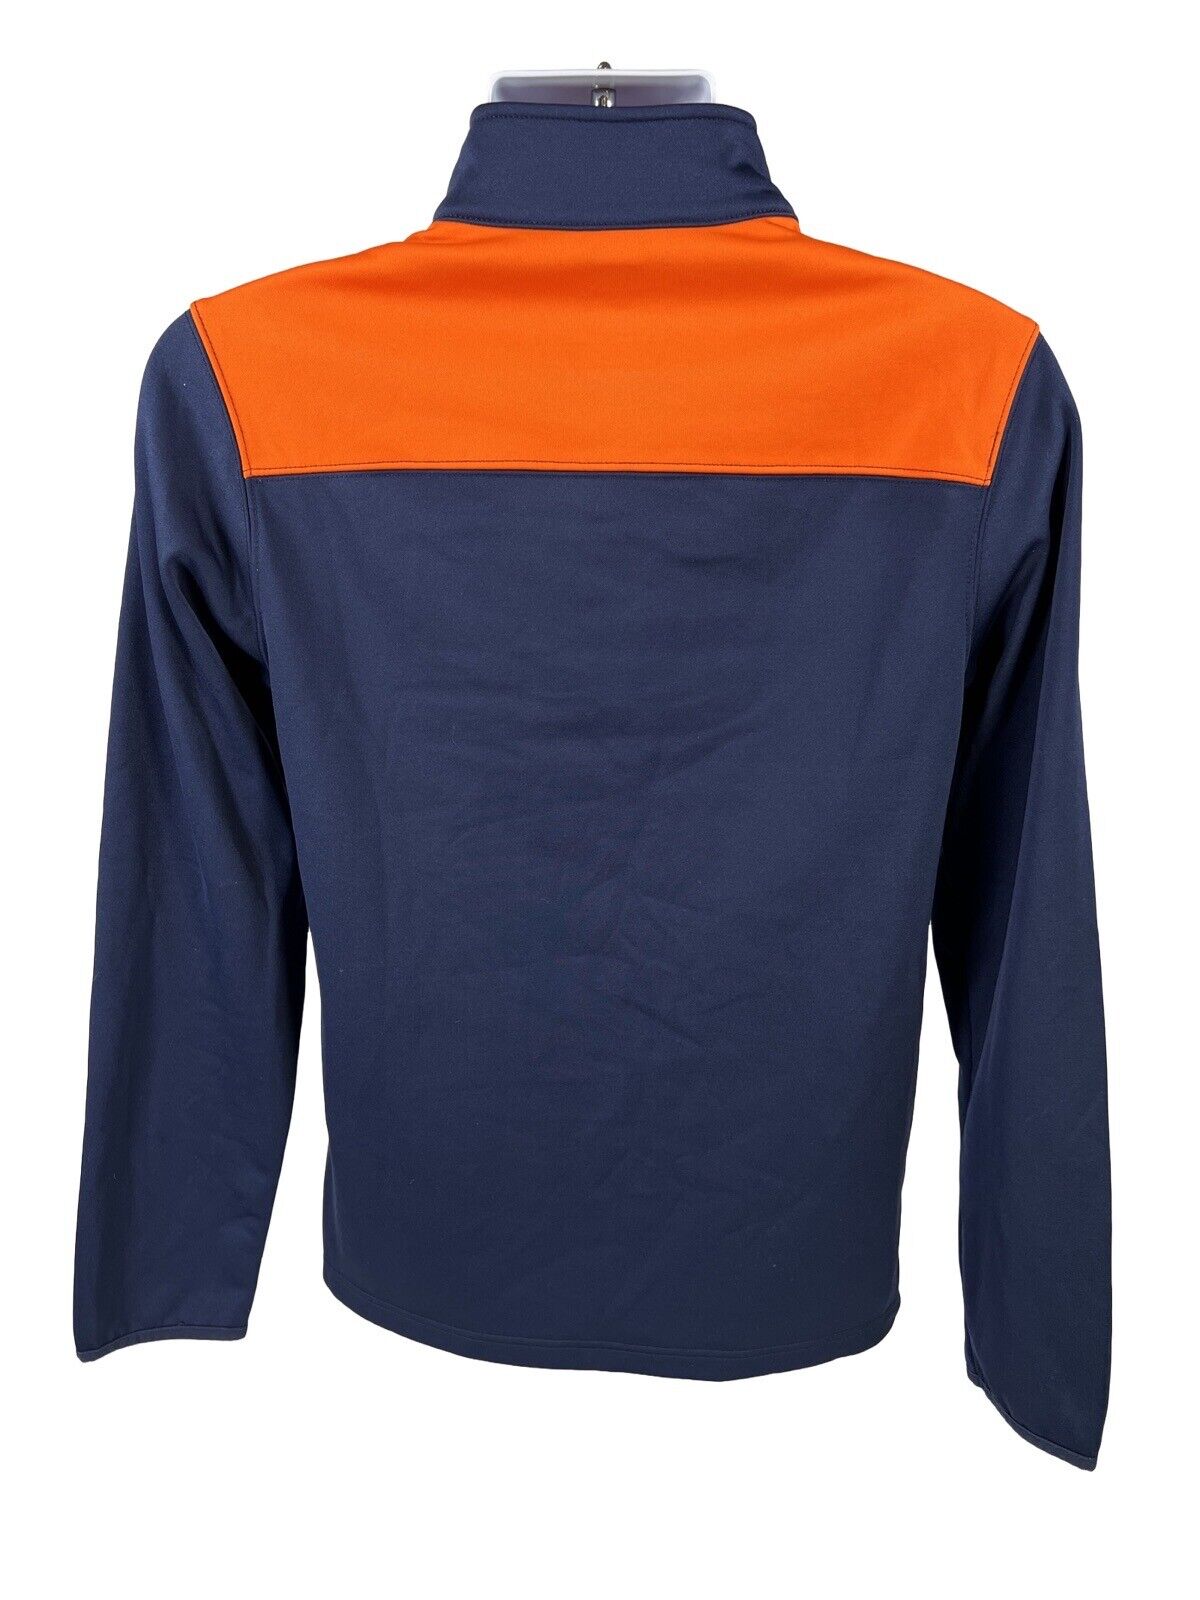 MLB Genuine Merchandise - Sudadera con capucha para hombre, color azul, Detroit Tigers, talla S